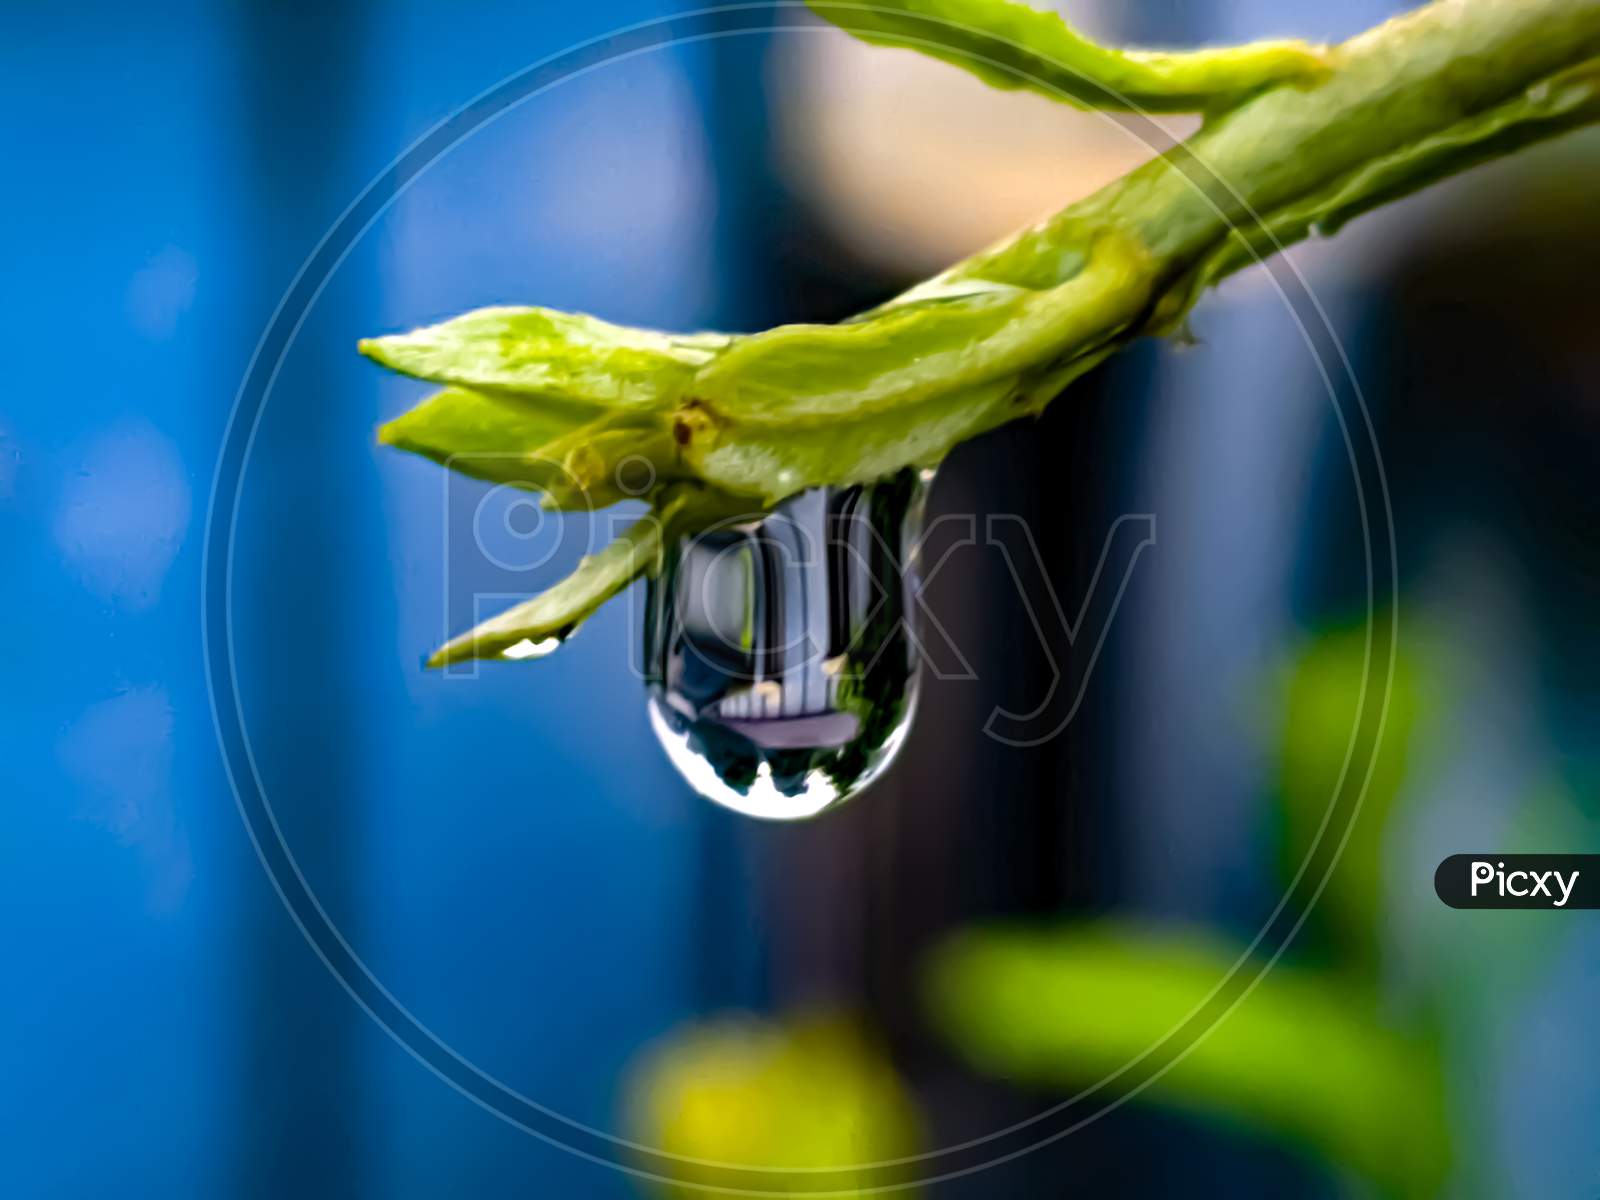 green leaves plant rain water droping garden rain water drop